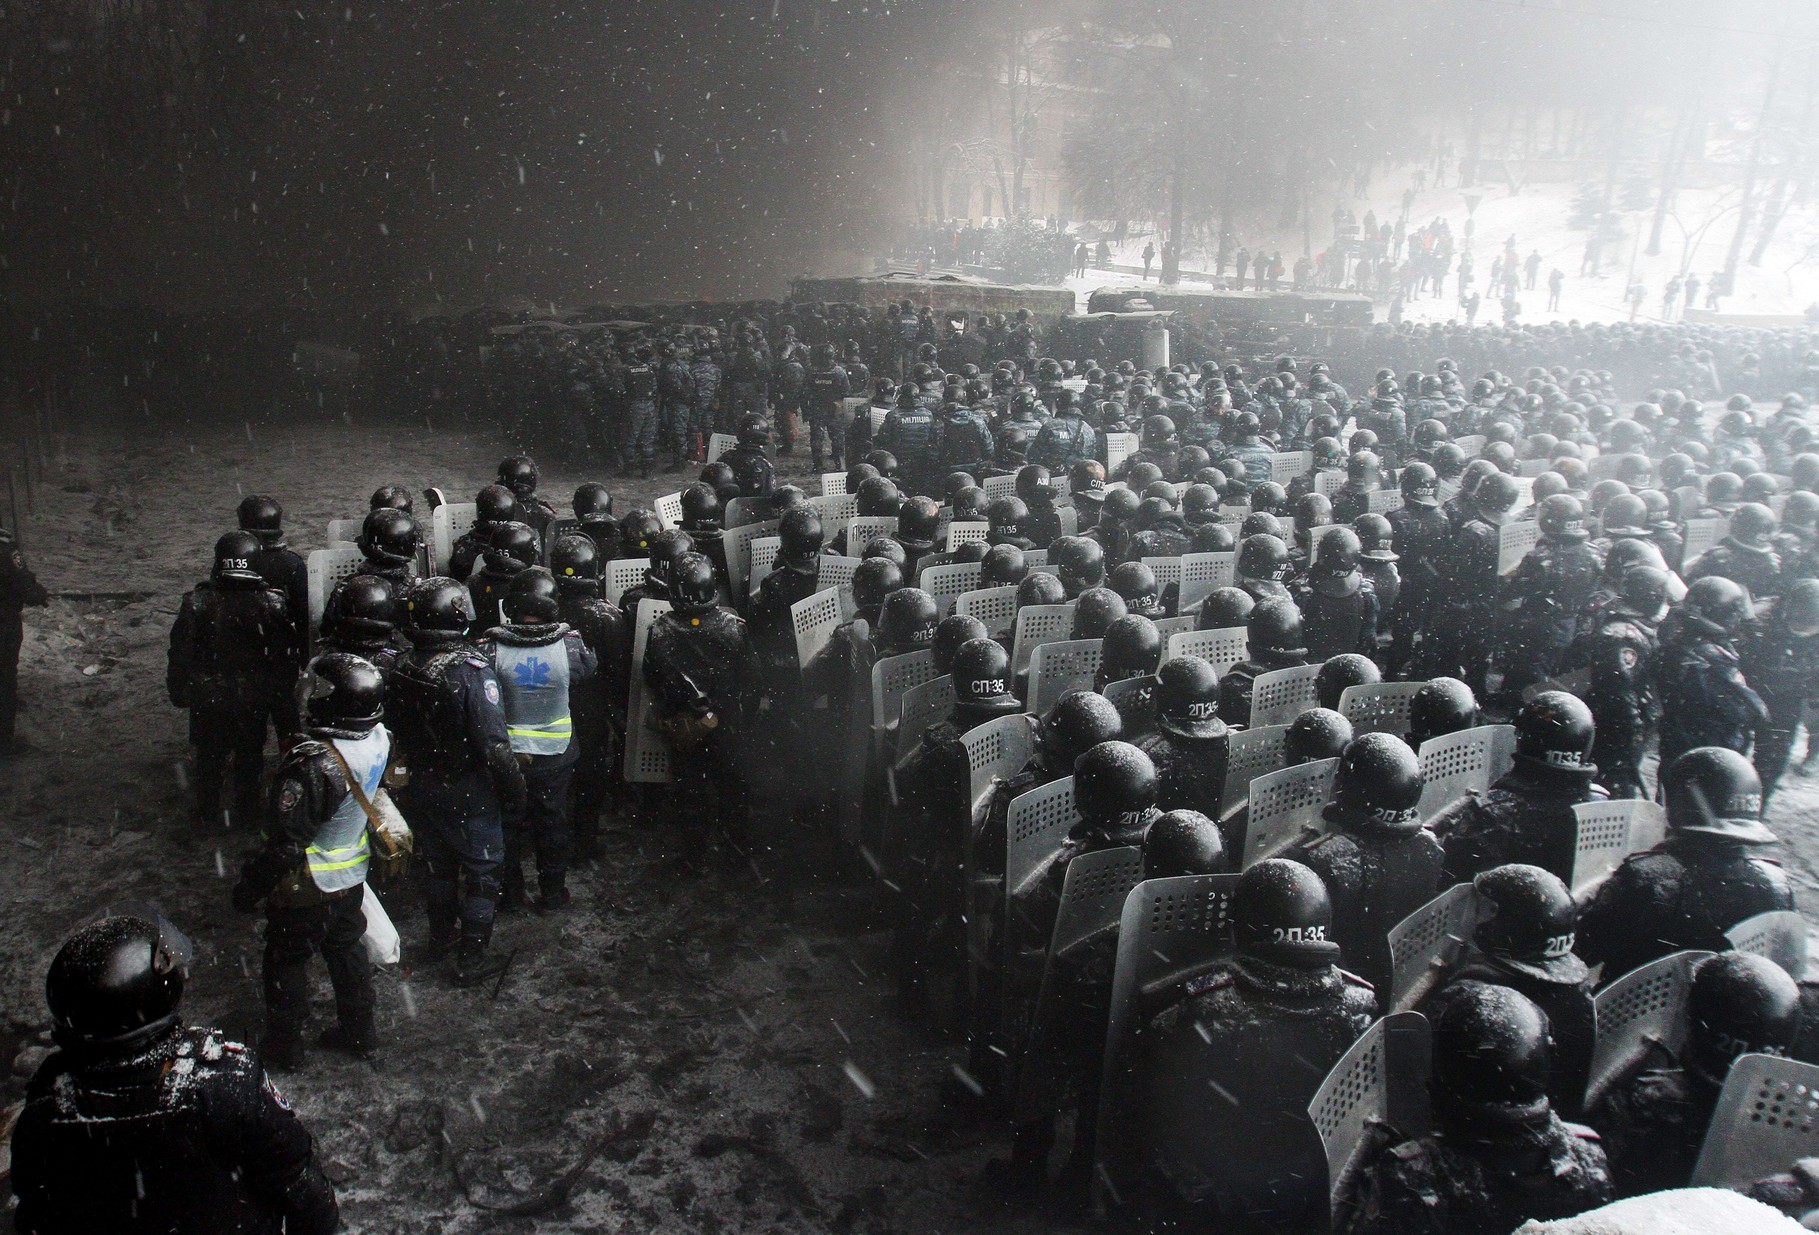 Konfronationerne på Maidan-pladsen i Kiev (november 2013 - februar 2014)